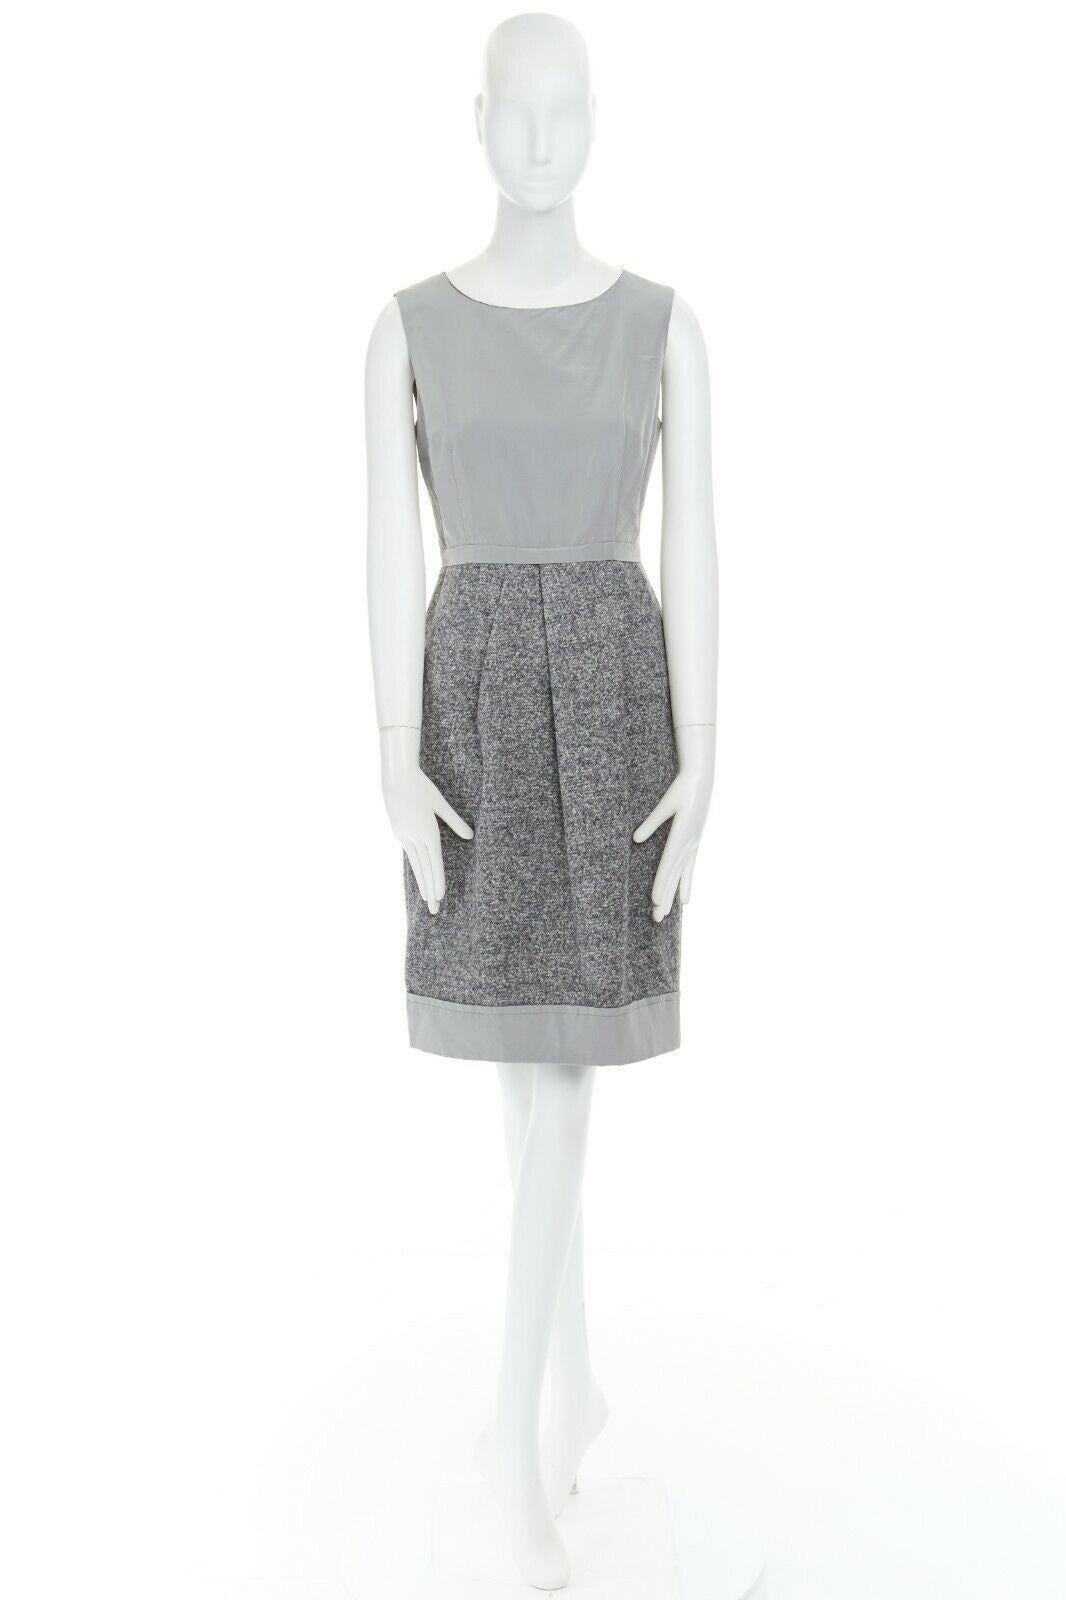 MAX MARA grey polyamide speckle wool skirt sleeveless work dress US8 FR40 M 
Reference: LACG/A00295 
Brand: Max Mara 
Material: Polyamide 
Color: Grey 
Pattern: Solid 
Closure: Zip 
Extra Detail: Virgin, polyamide, alpaca. Grey. Wide neckline. Grey